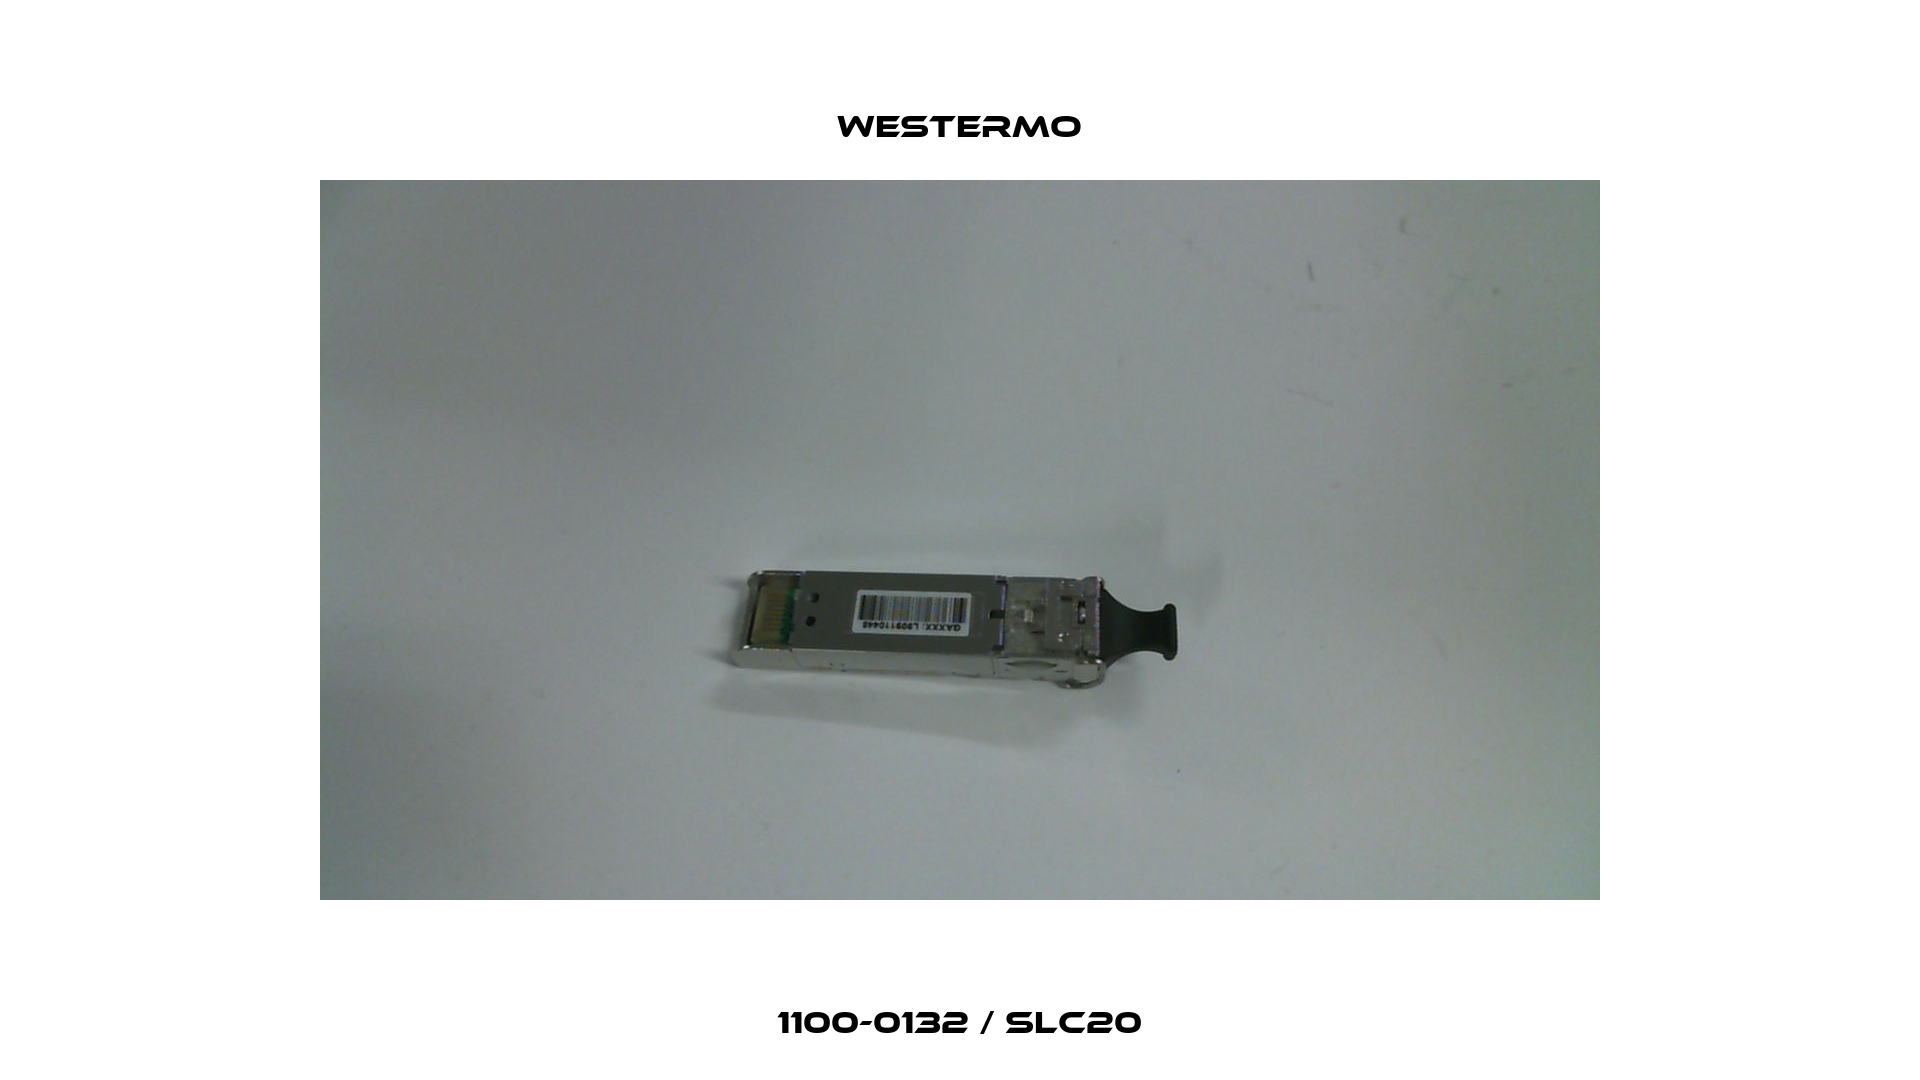 1100-0132 / SLC20 Westermo